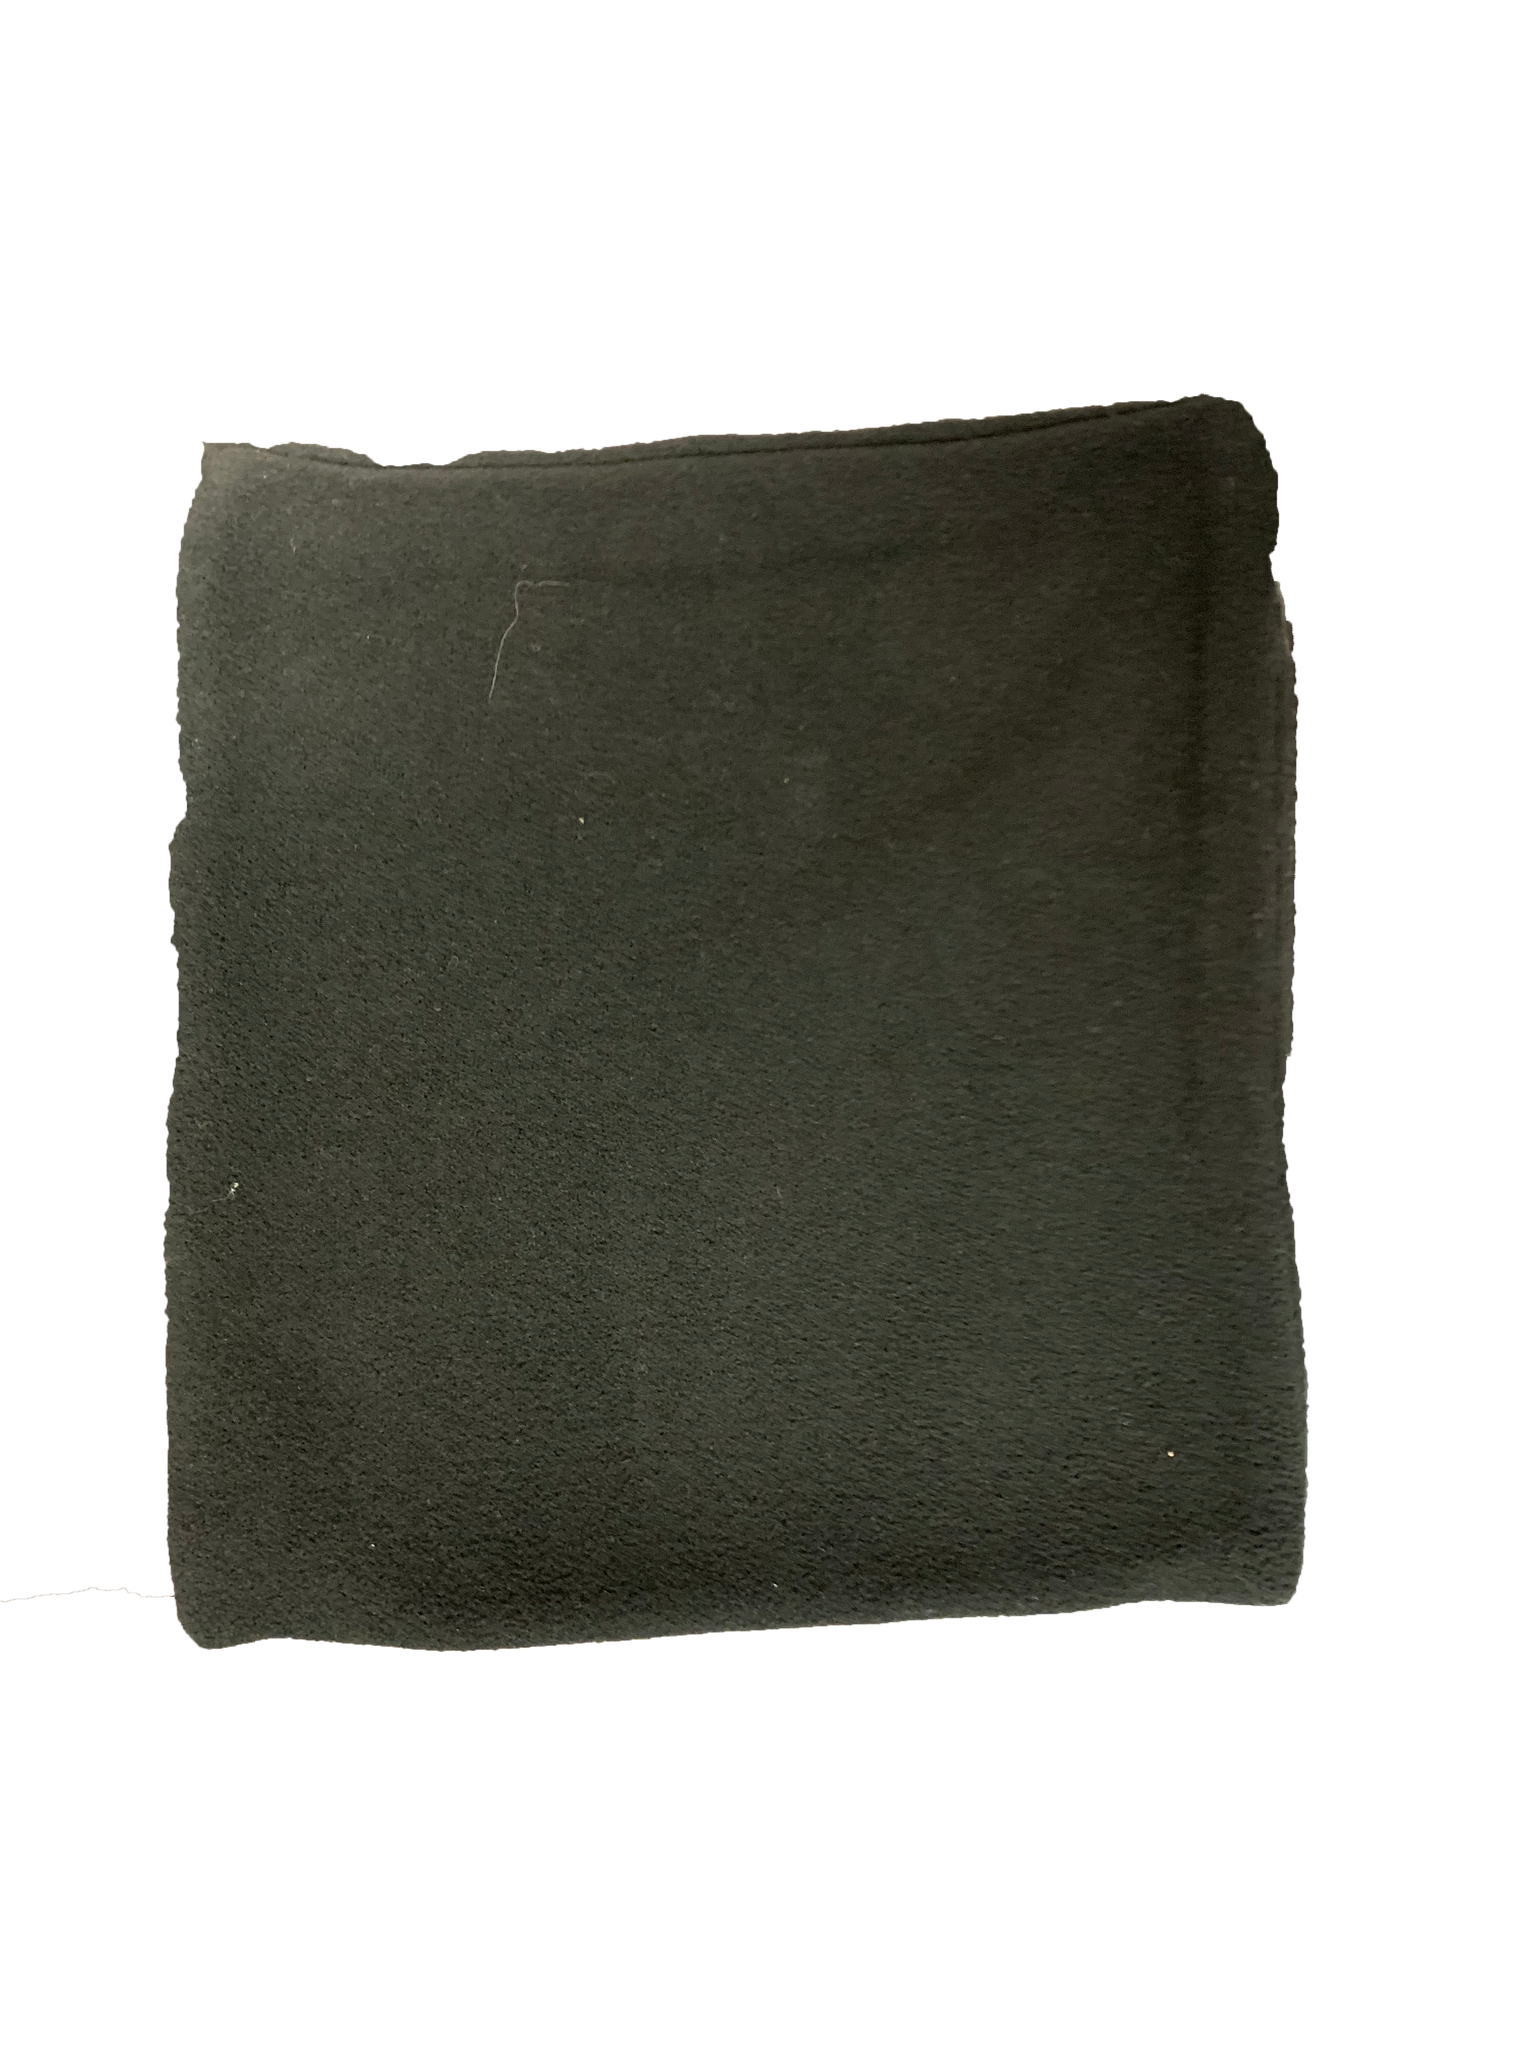 Karvena Premium Micro-Fleece Neck Warmer - Black - Adult Small / Jr Large